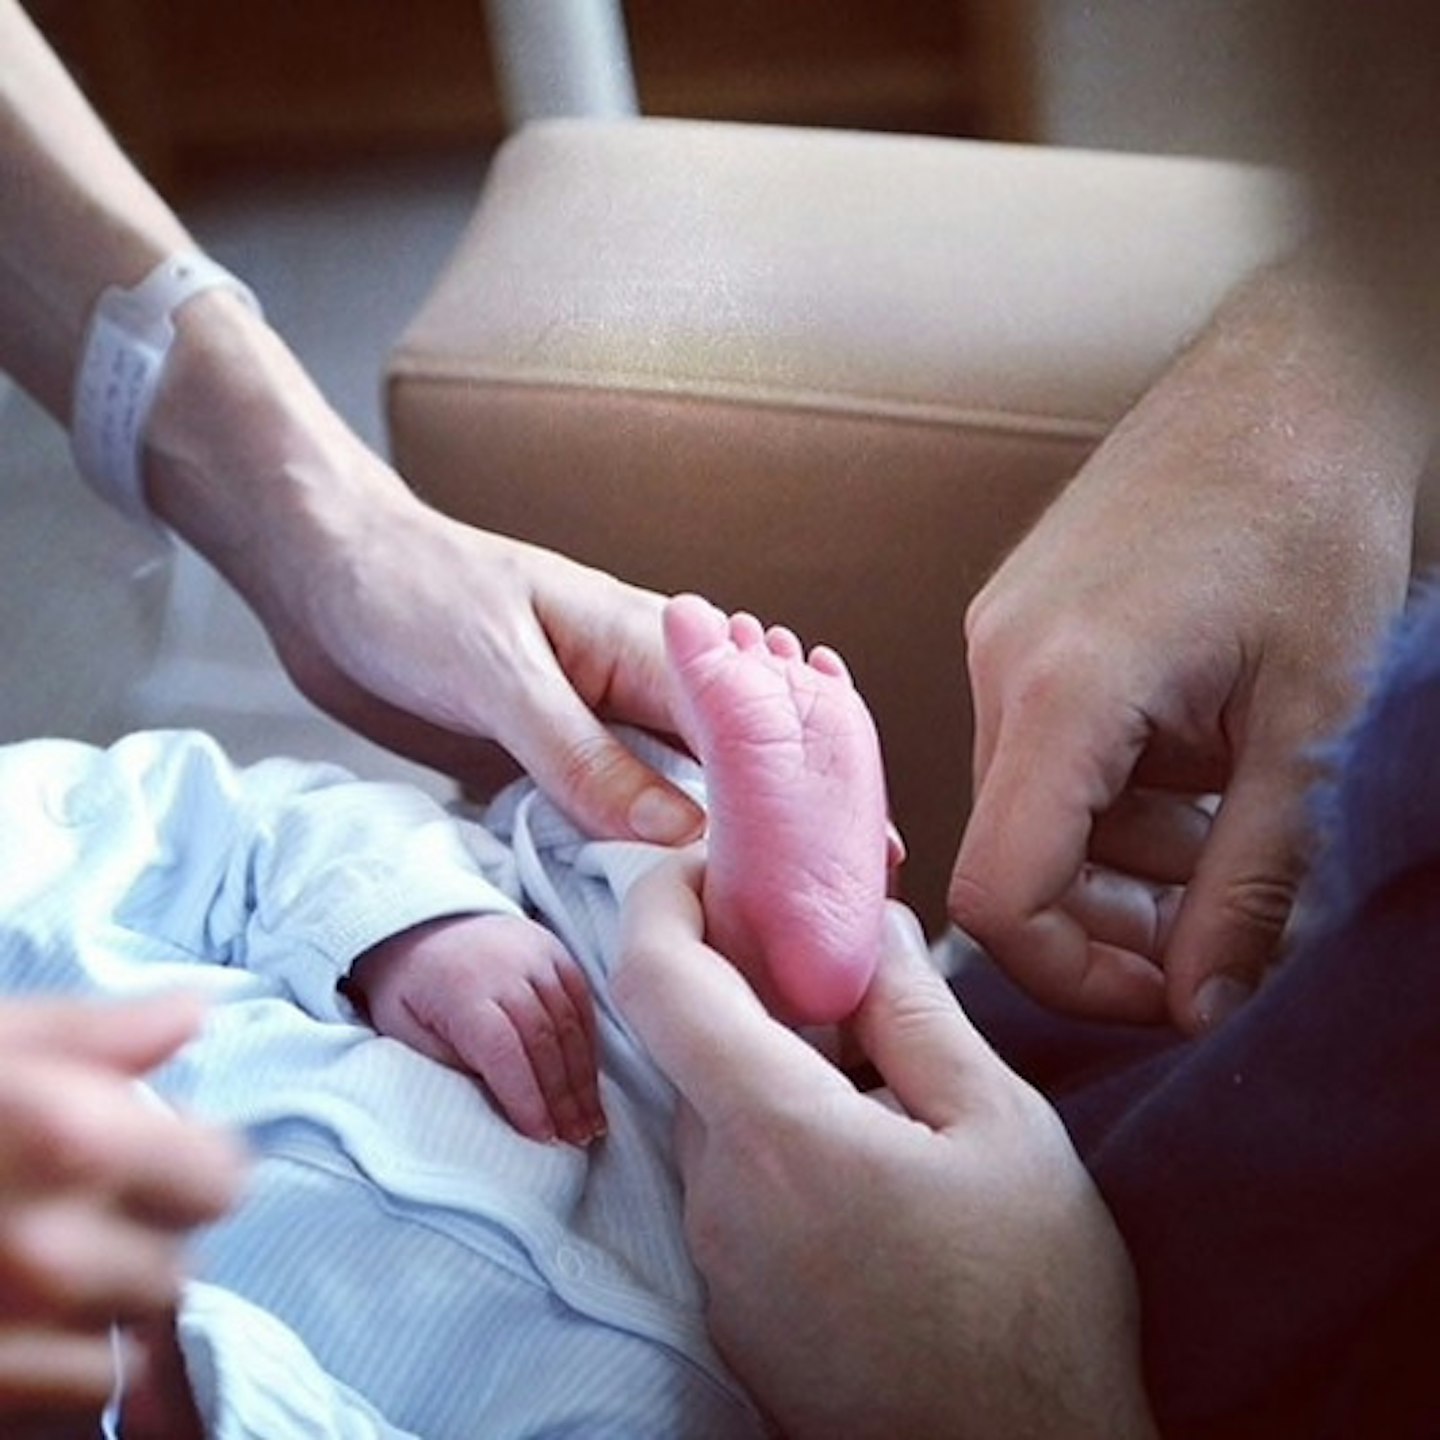 Natalia Vodianova's baby, Maxim